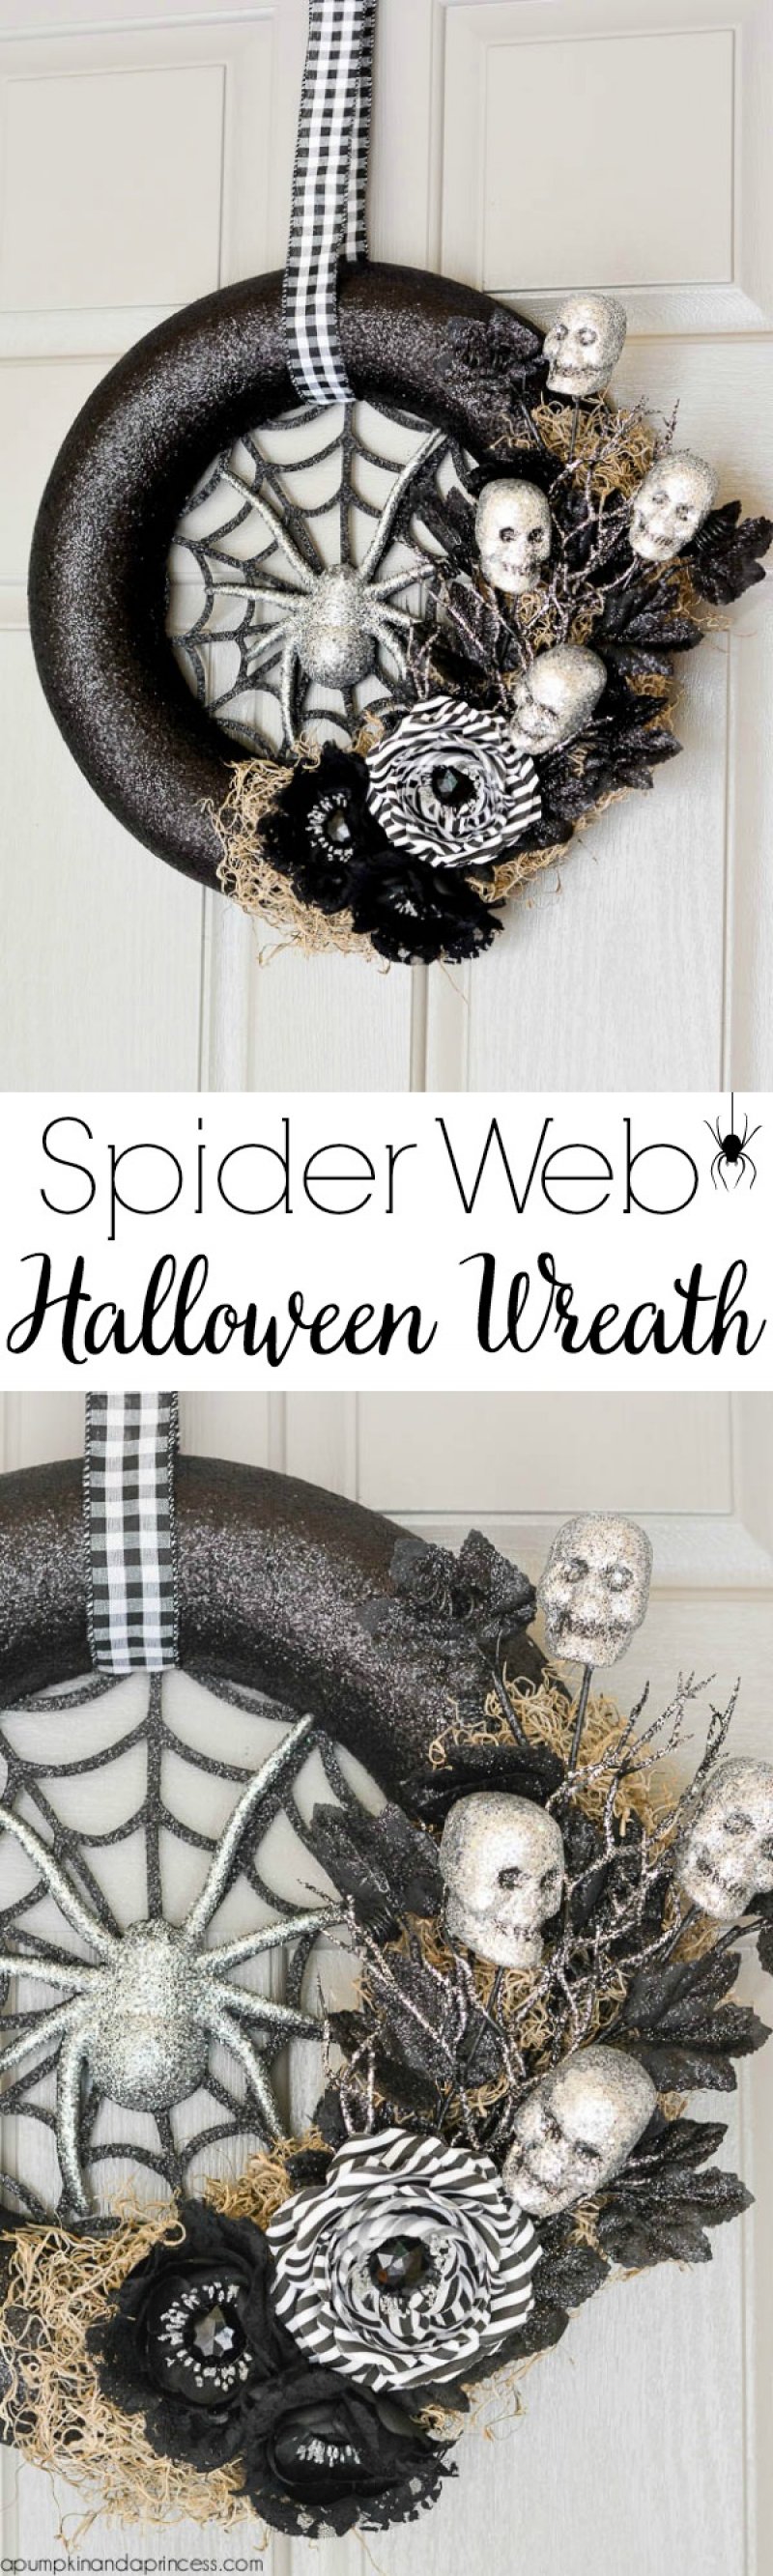 DIY Spider Web Halloween Wreath.